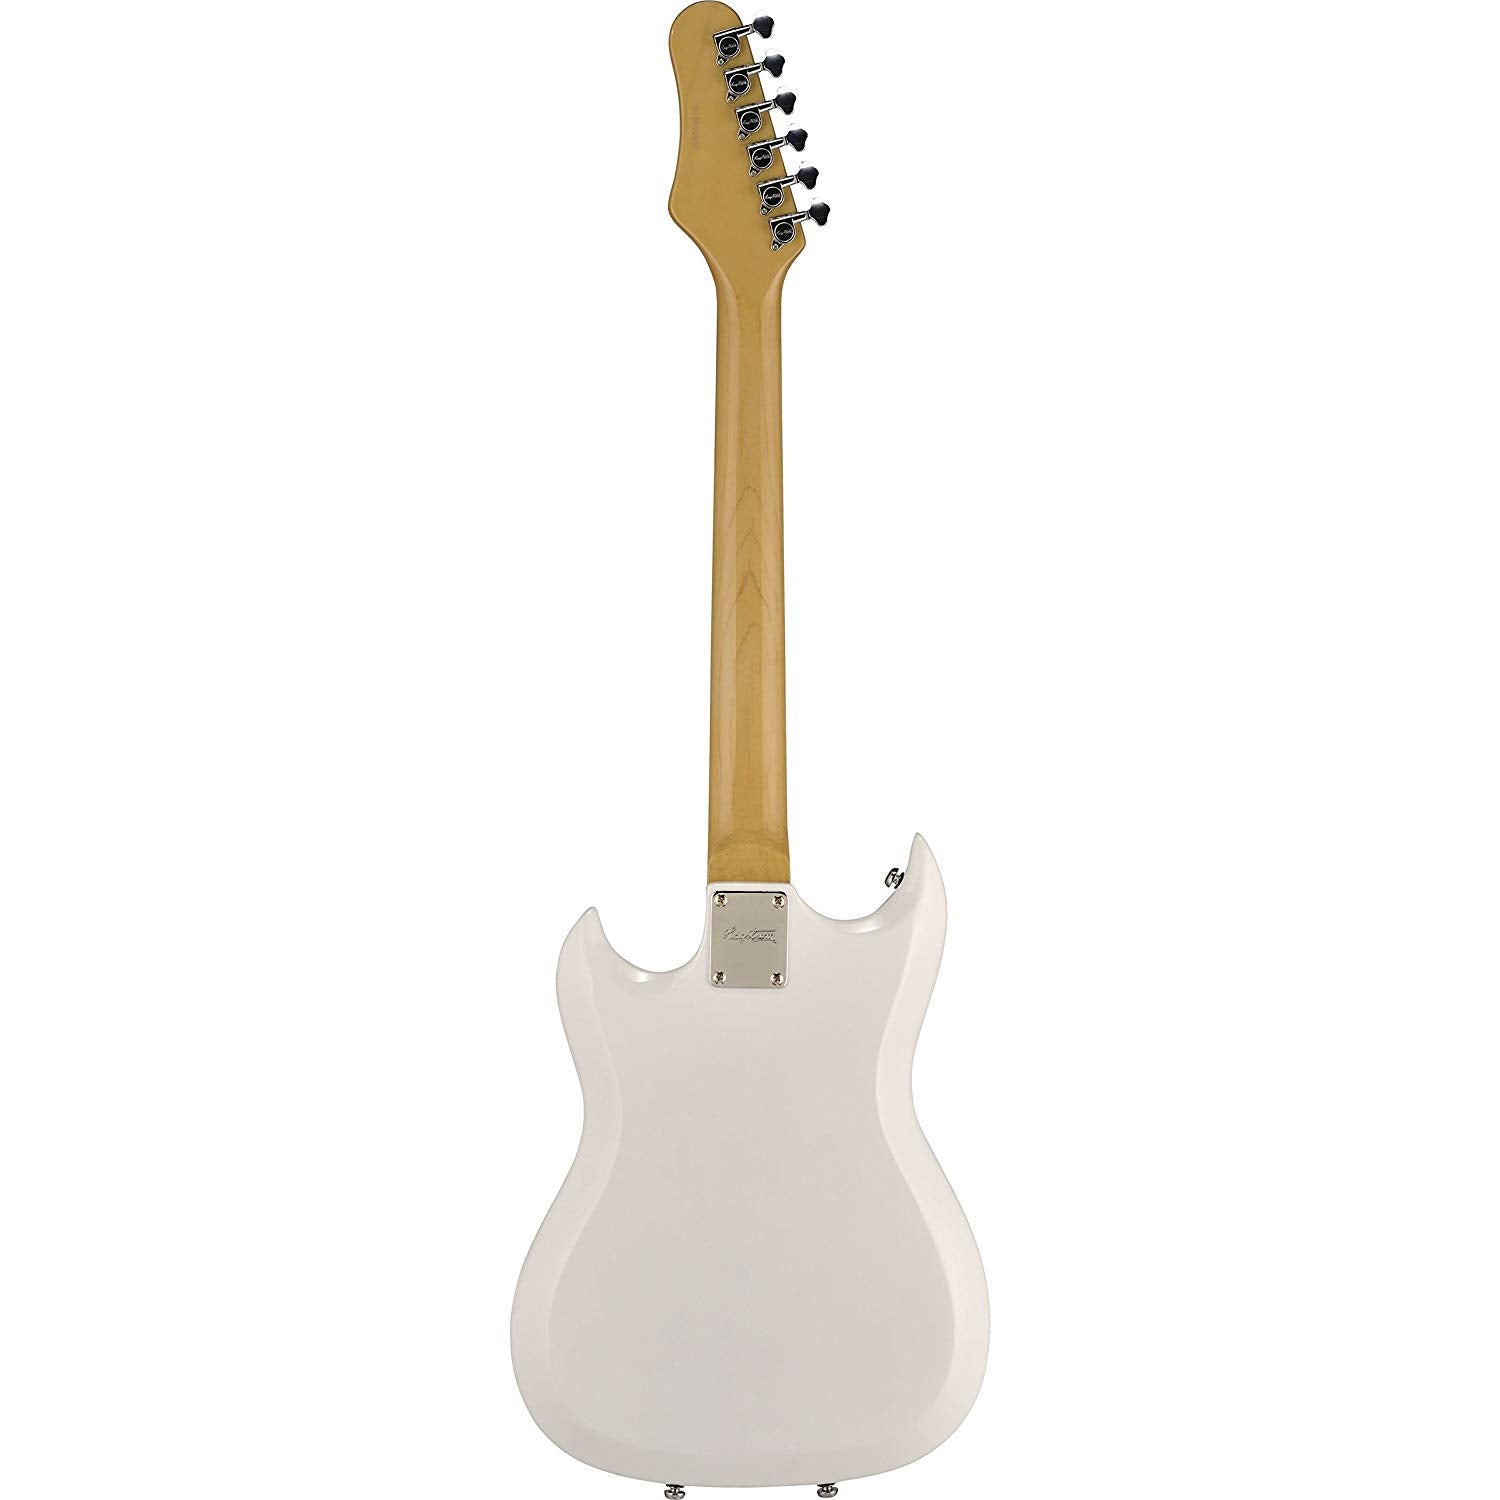 Hagstrom H-3 Retroscape Series 6 String Electric Guitar - White HIII-WHT